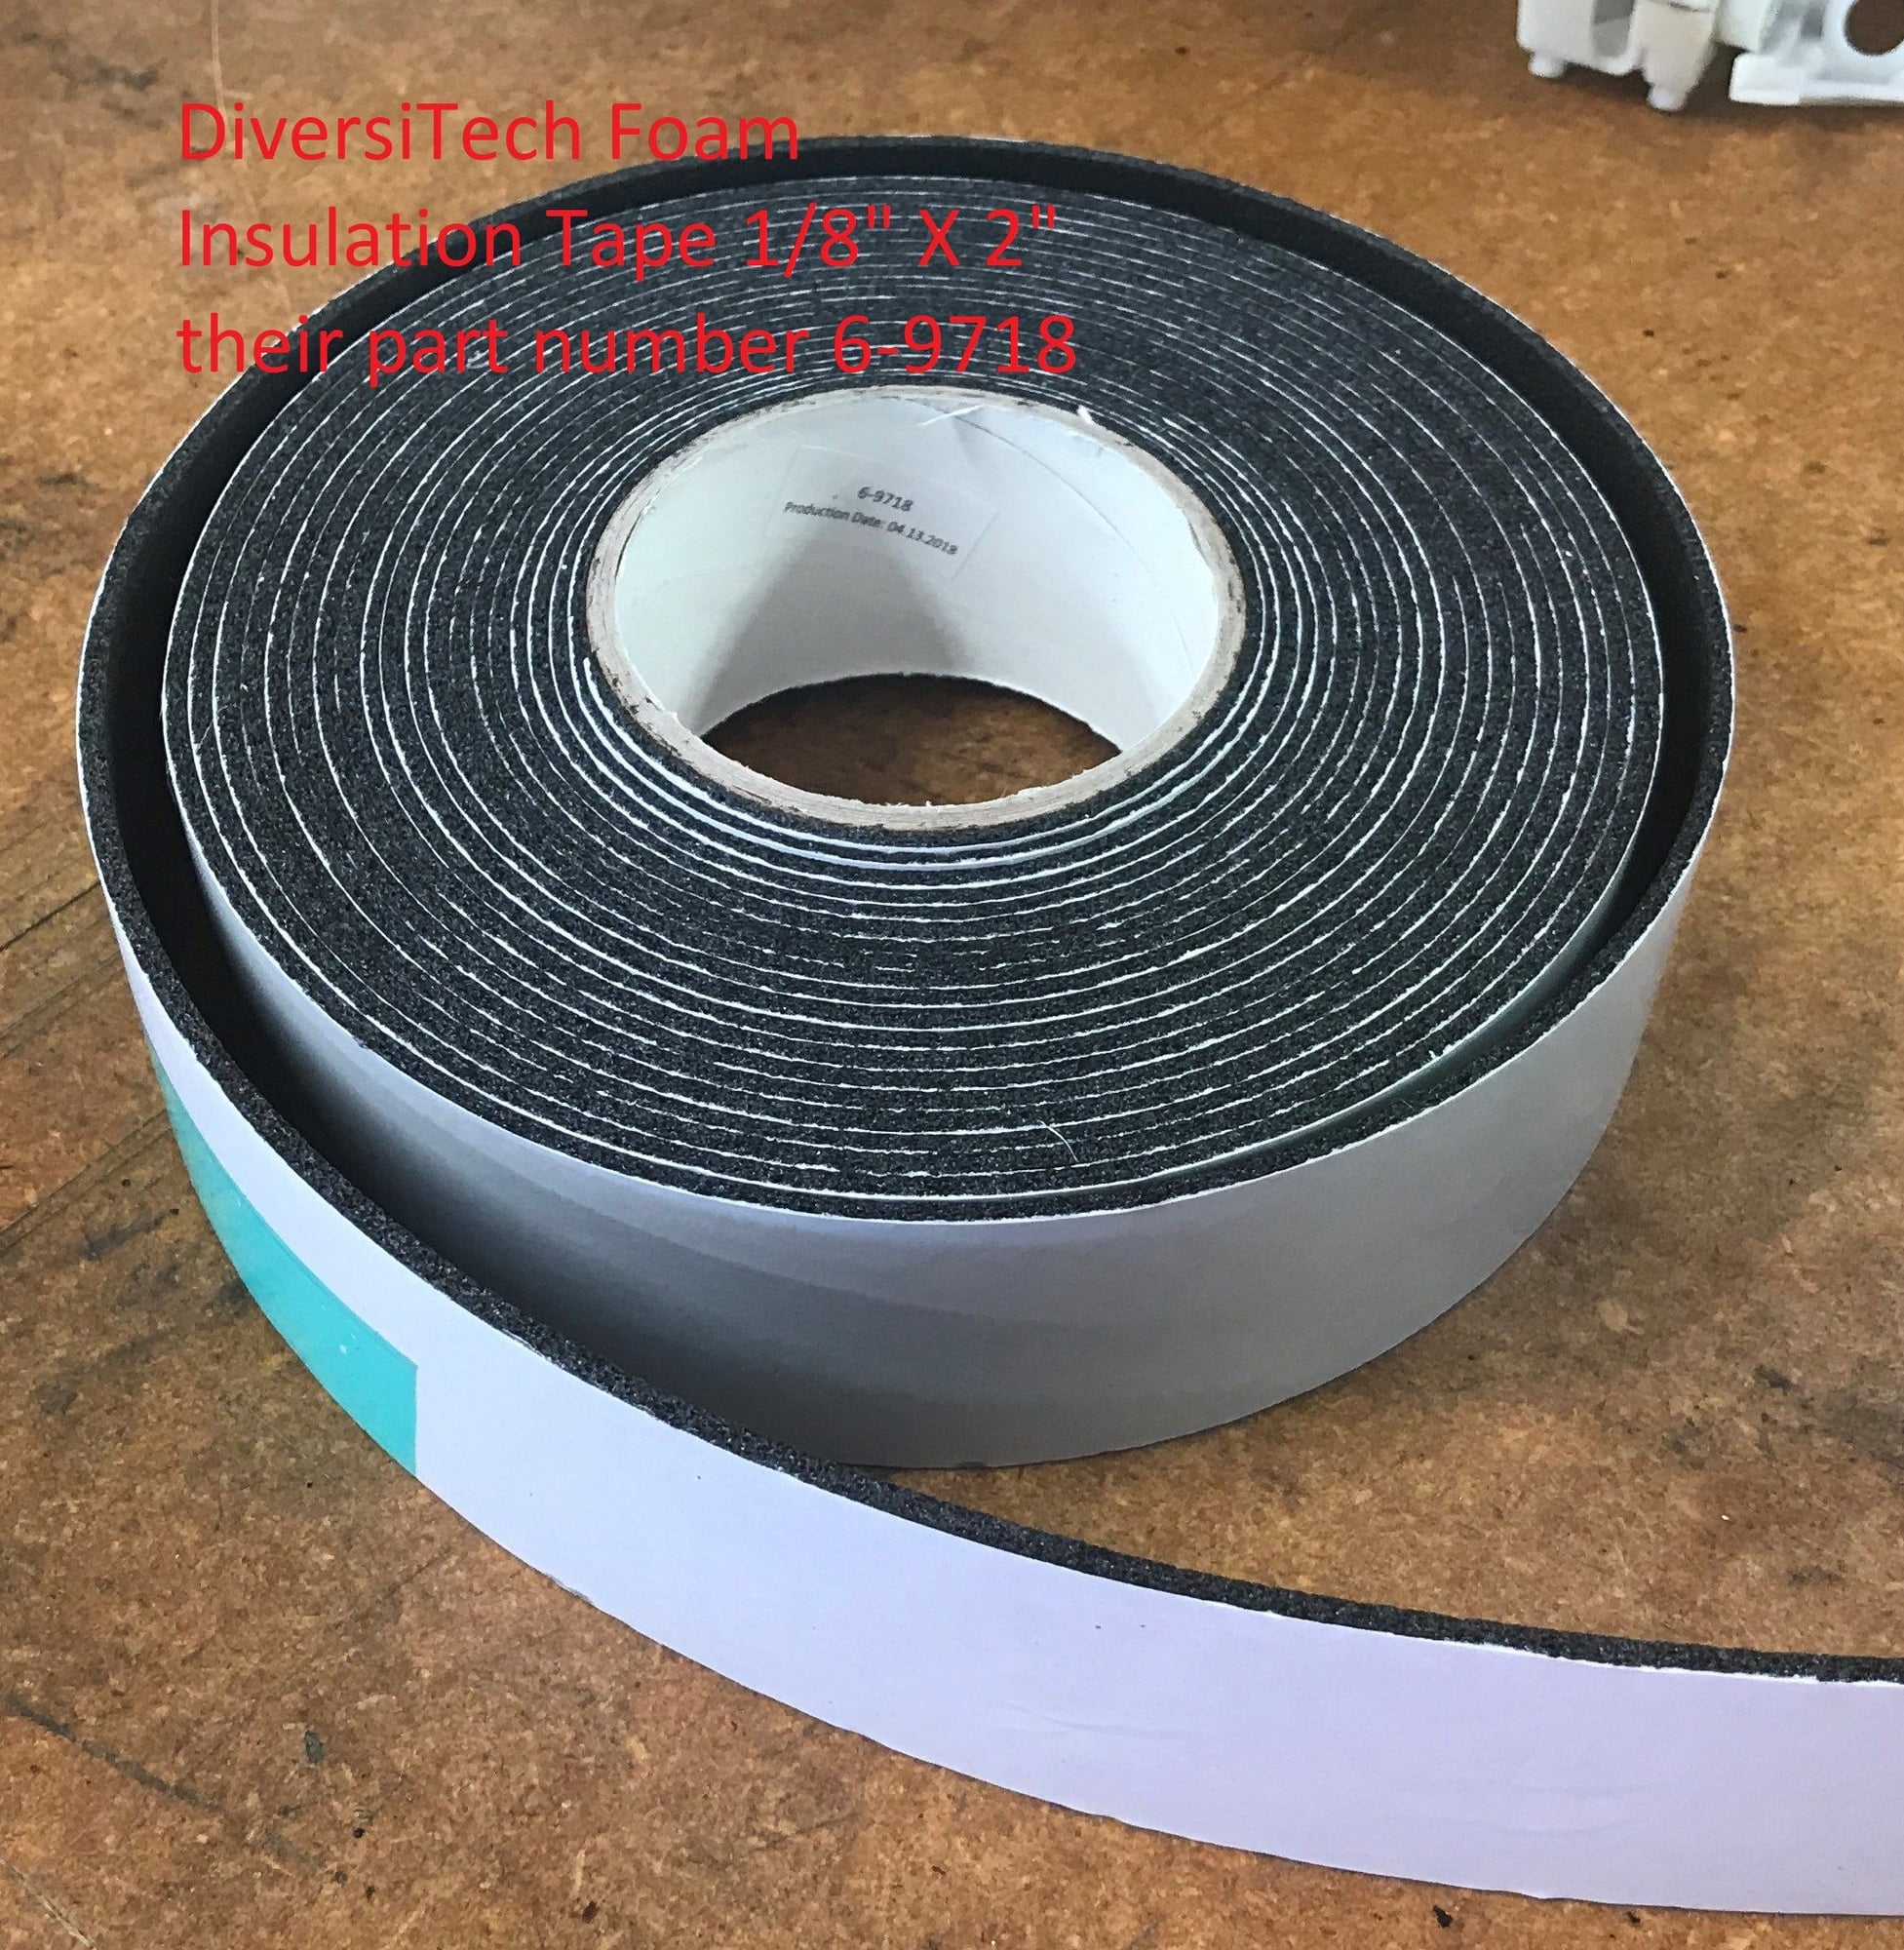 Diversitech 30 ft. Foam Insulation Tape 6-9718